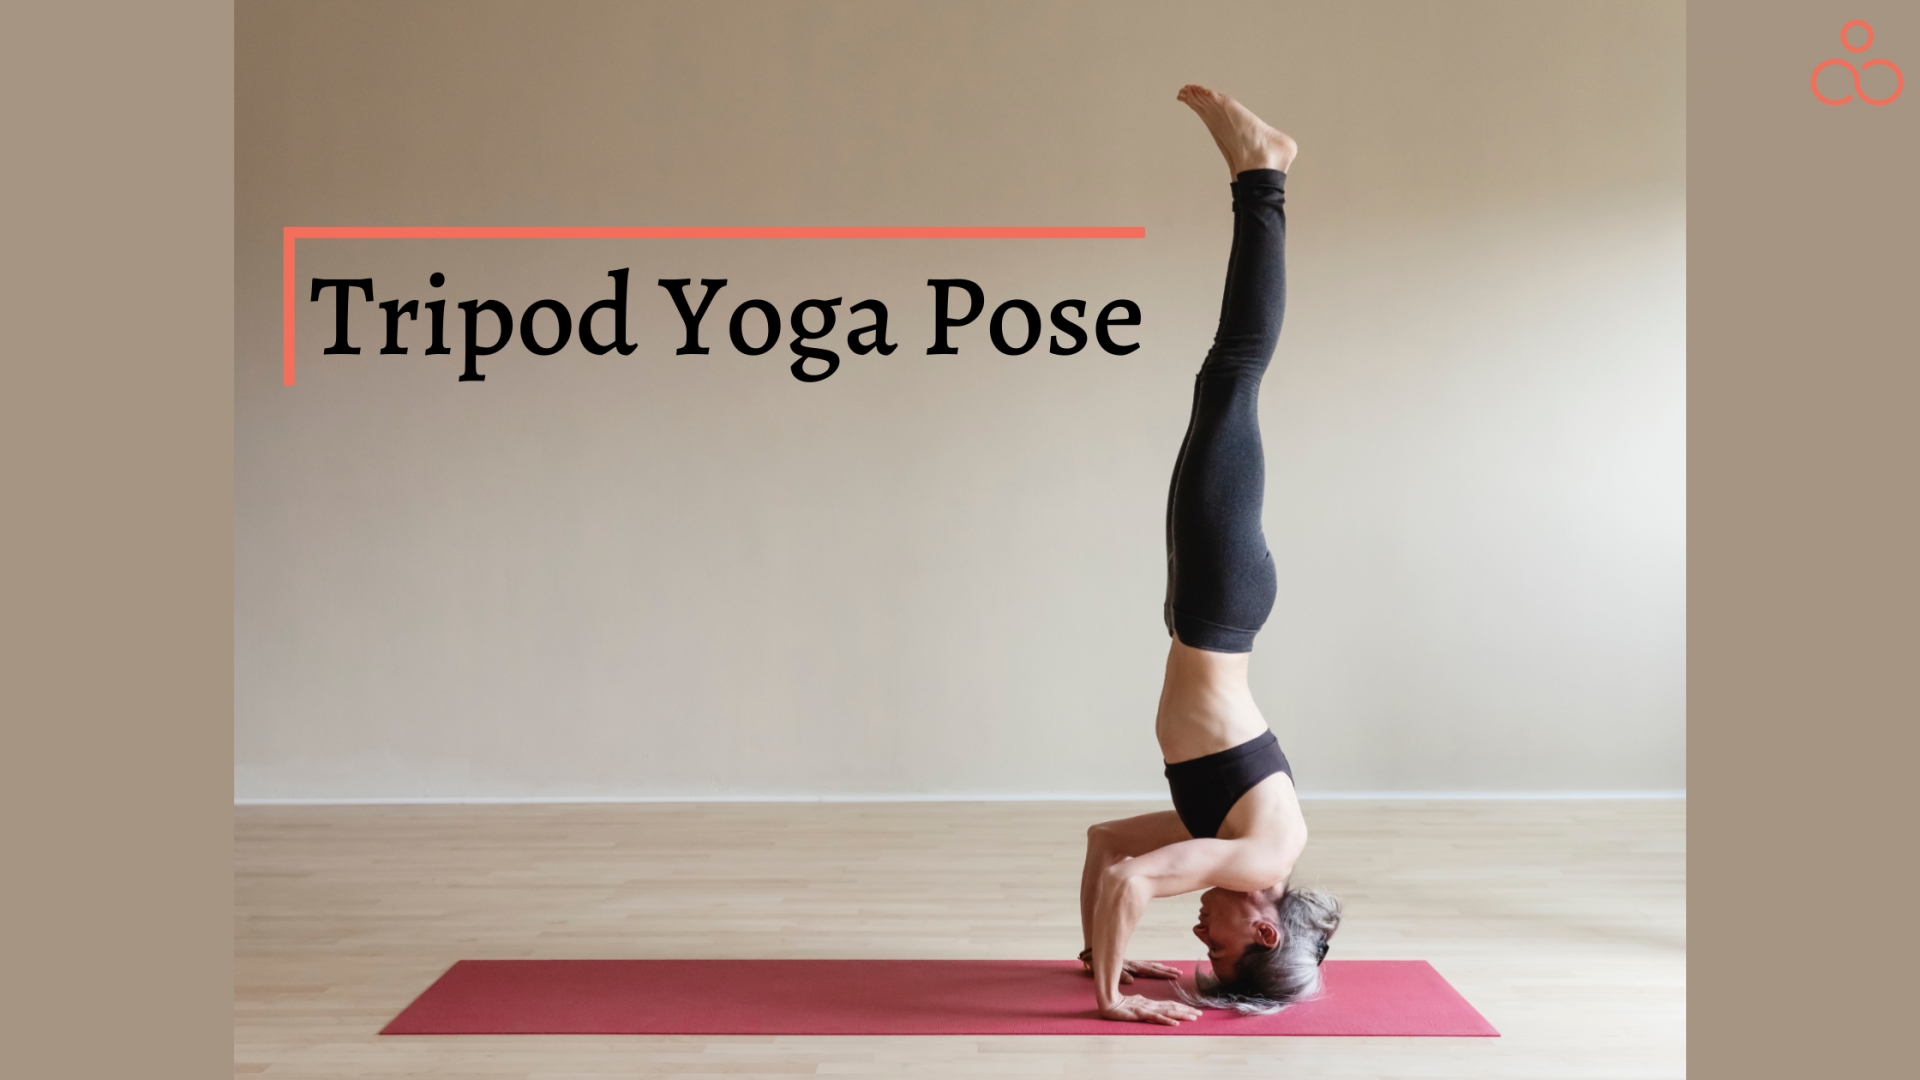 Tripod Yoga Pose - Anatomy, How To Do It And Benefits